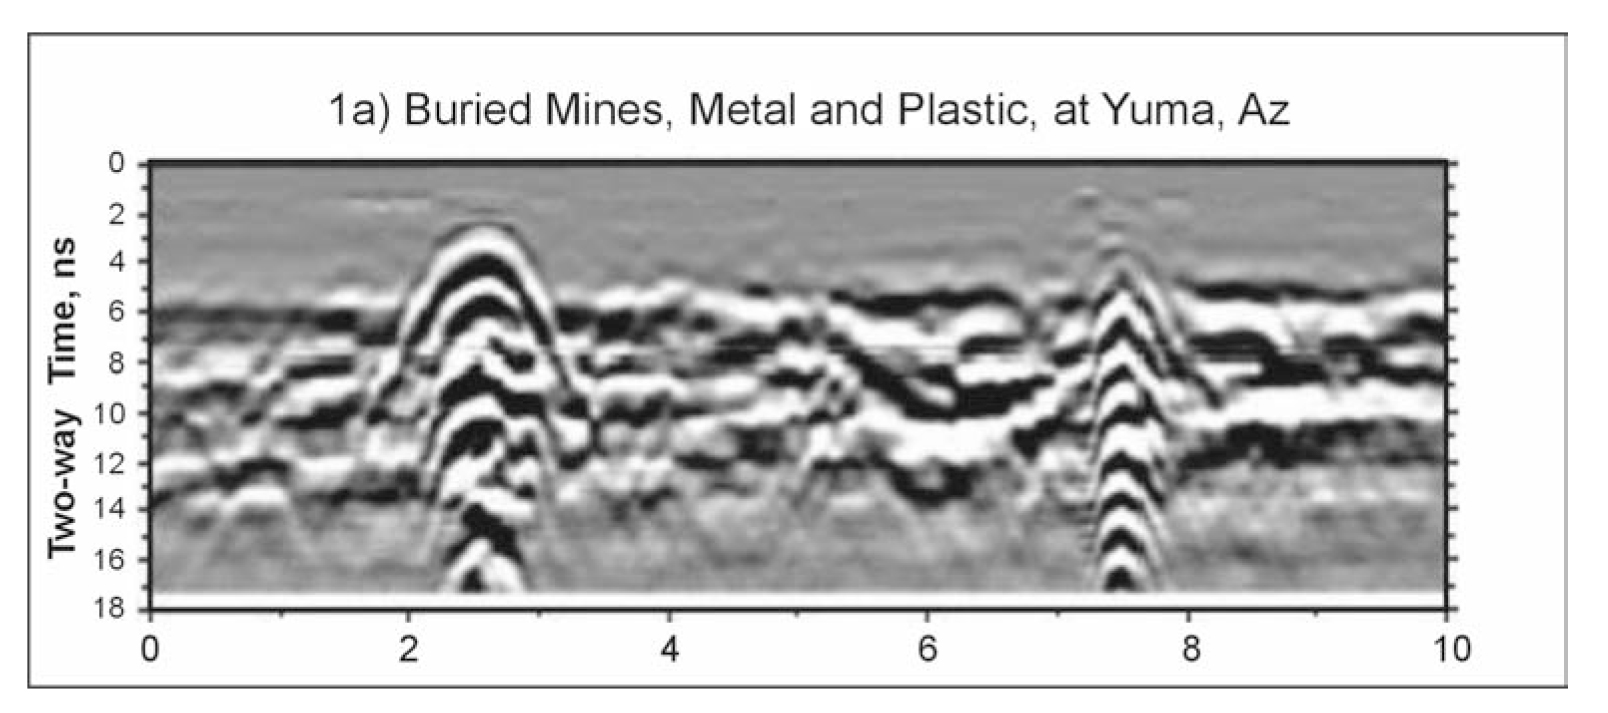 Ground Penetrating Radar data across buried metal and plastic mines.